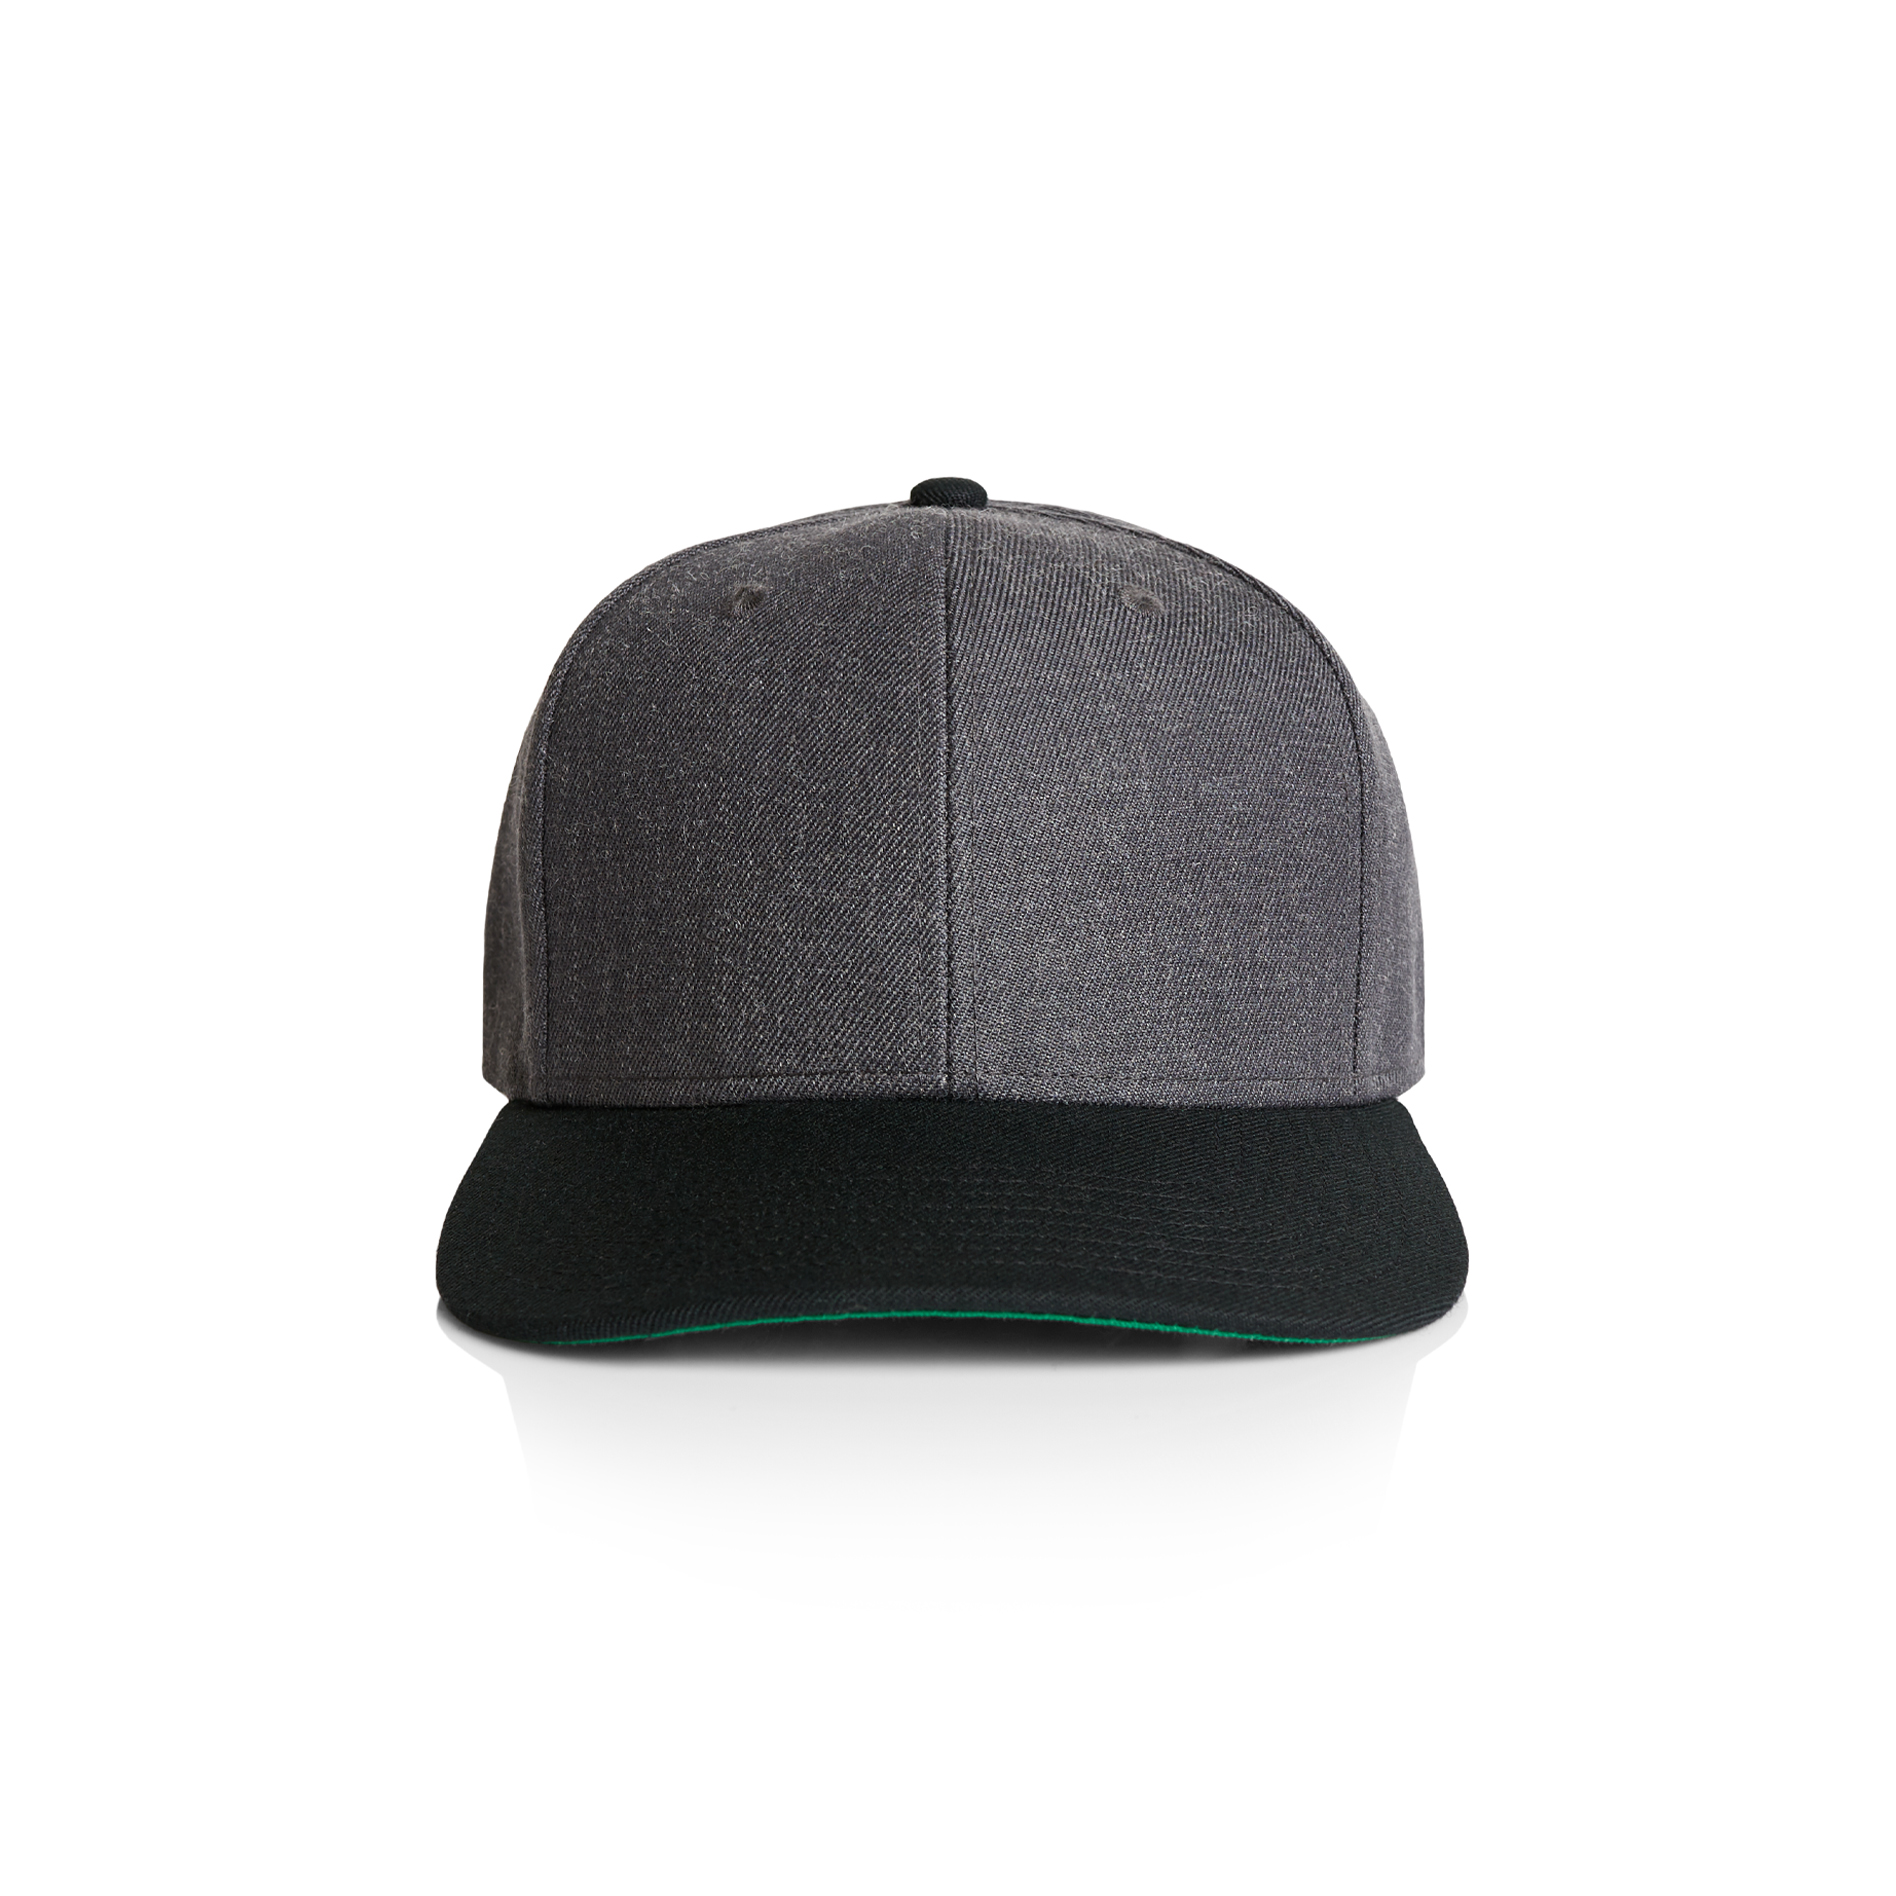 AS Colour Clip Snapback Cap - Dark Grey Black | Uniform Edit